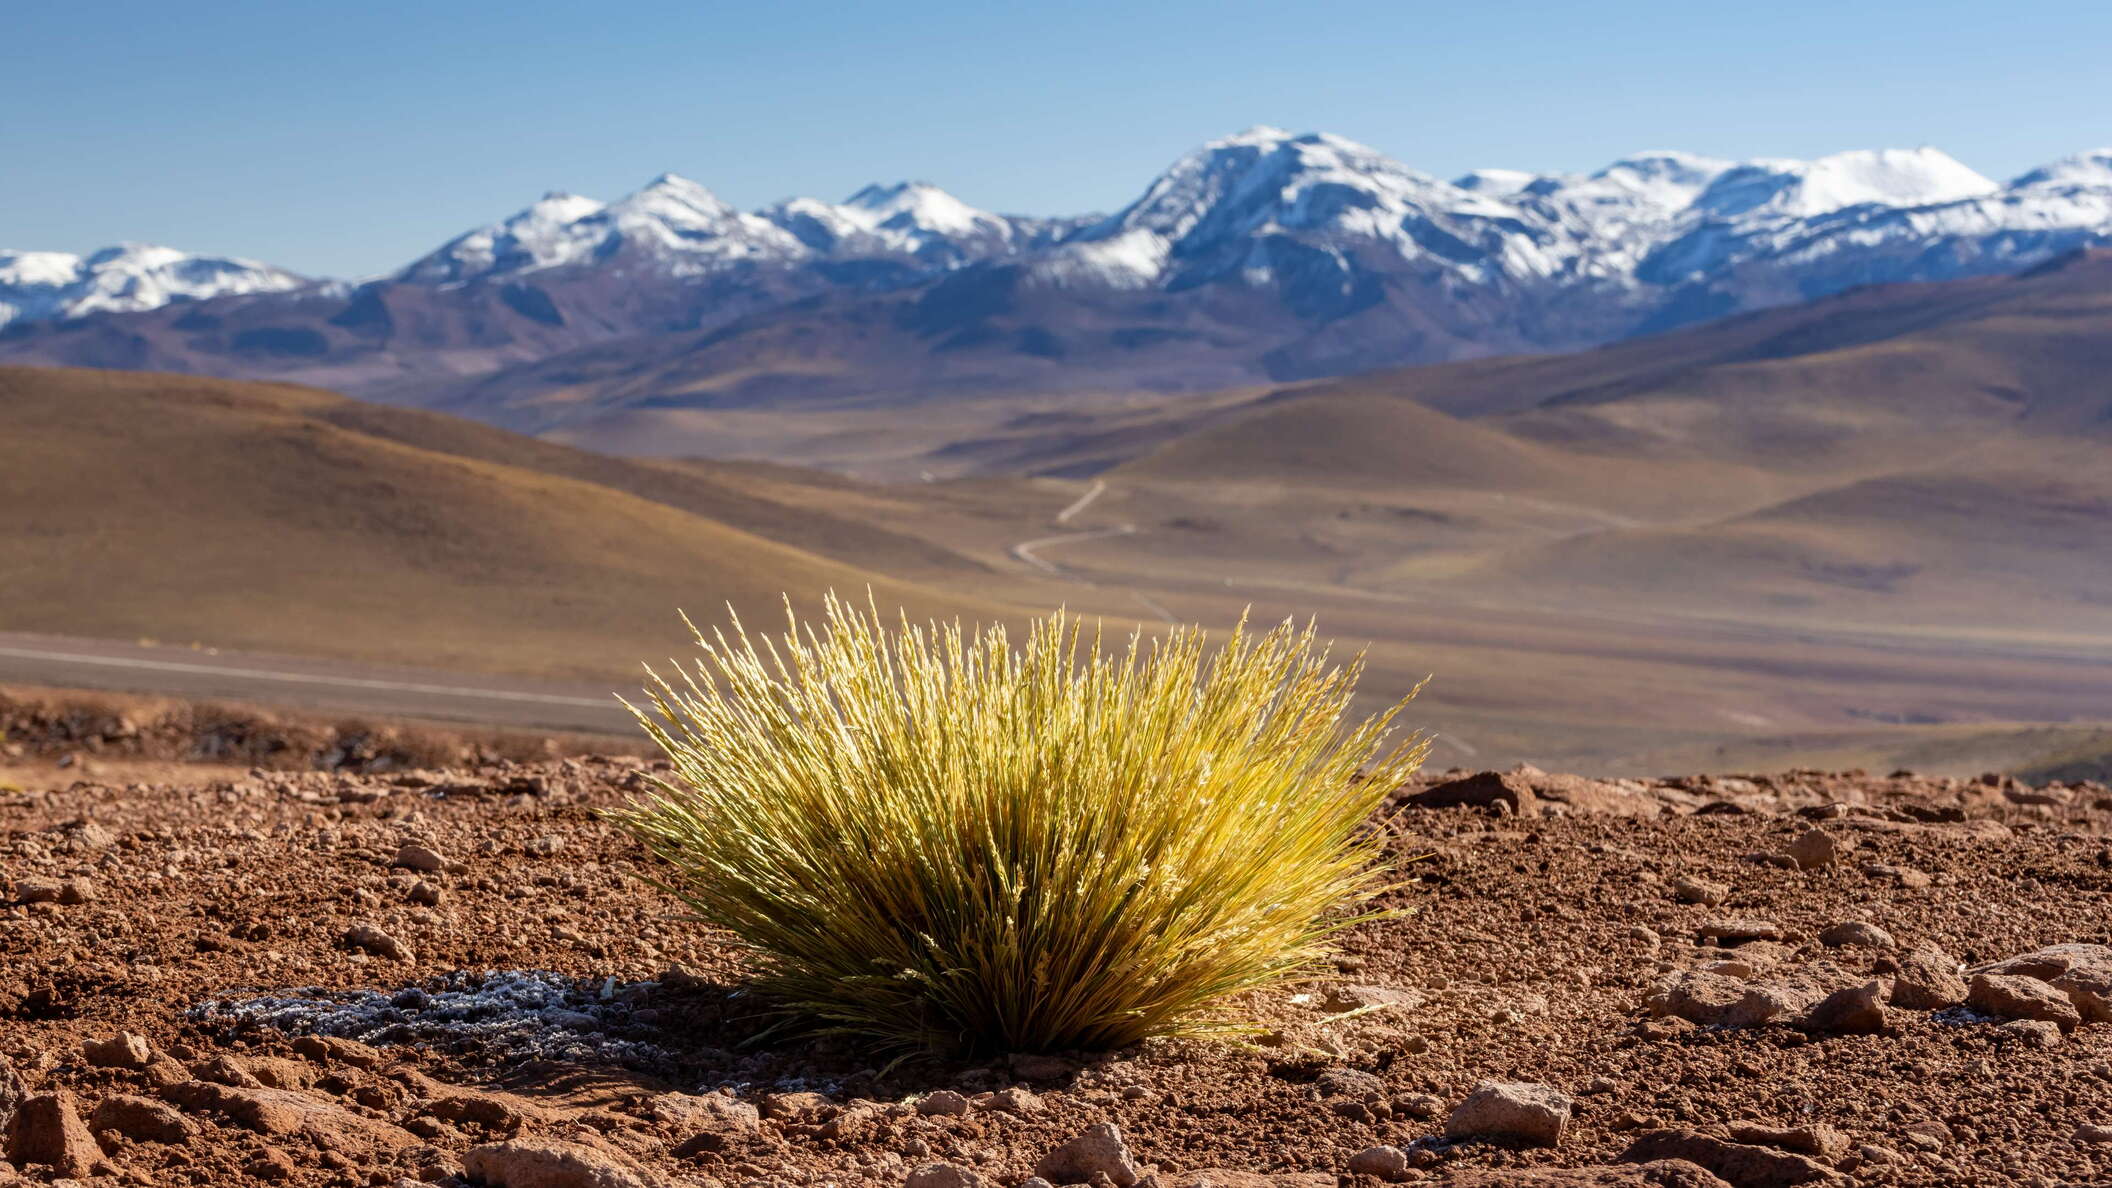 El Tatio | Altiplano with tussock grass